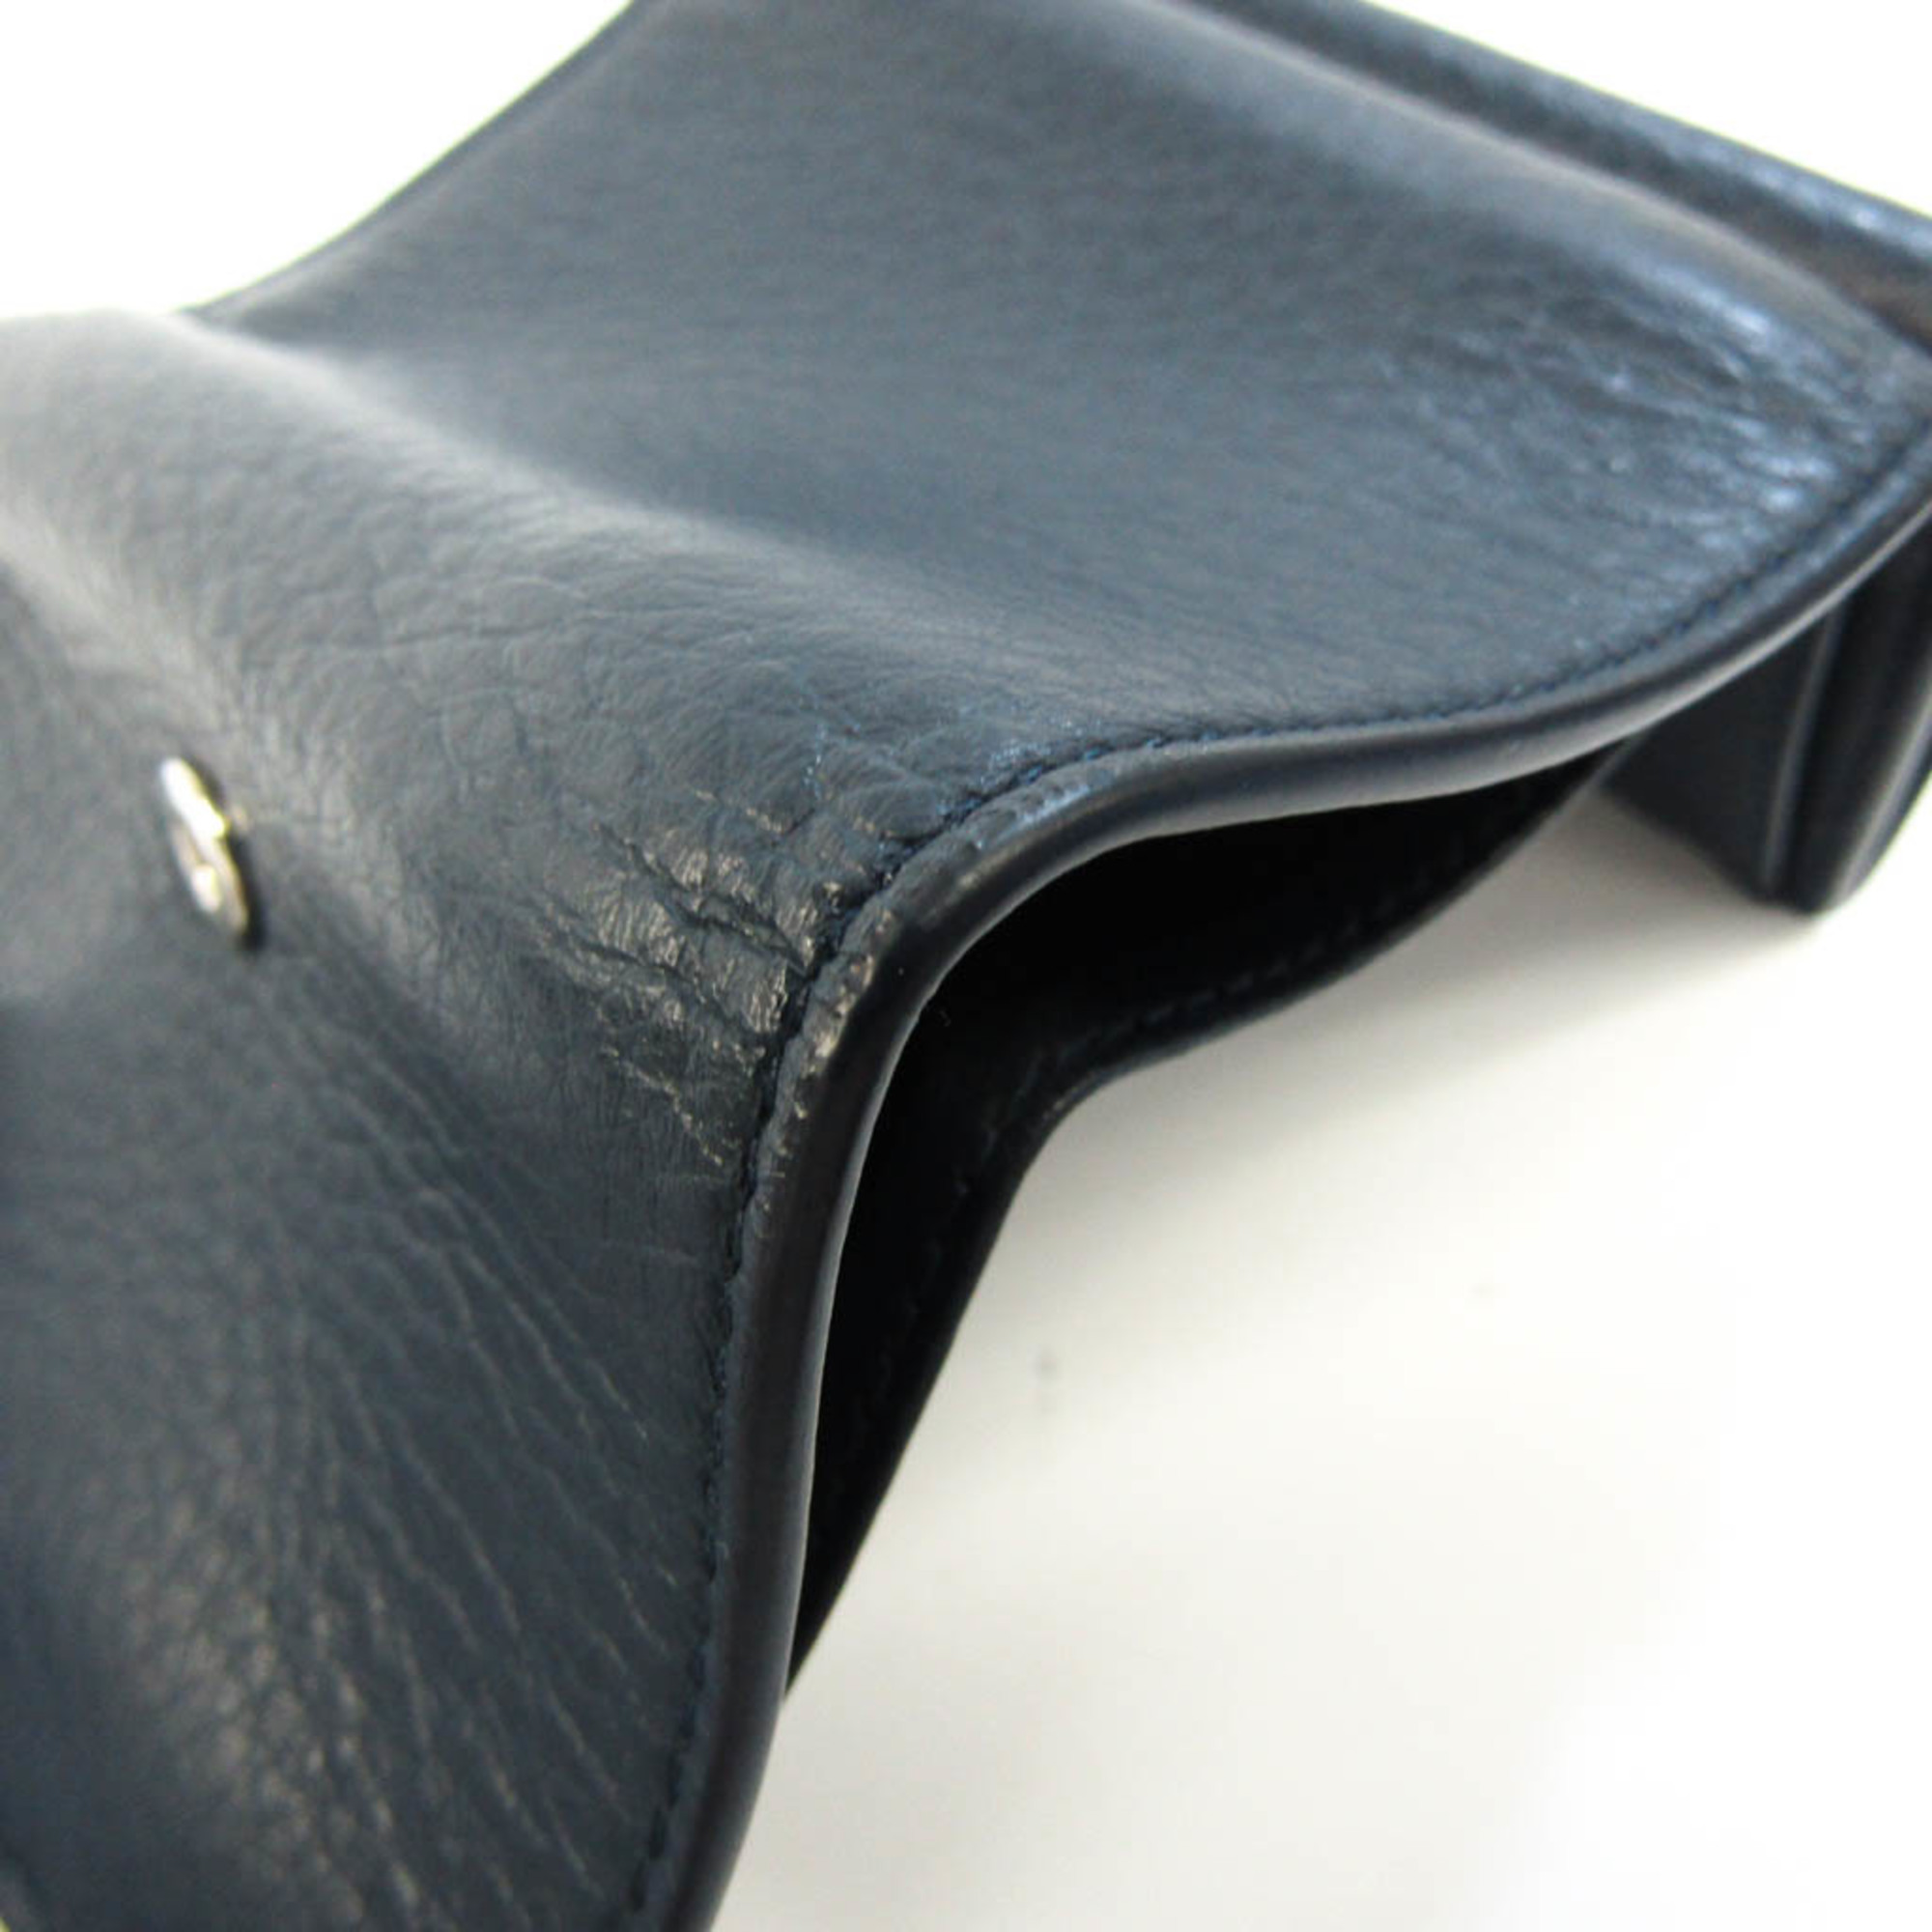 Balenciaga Paper Mini Wallet 391446 Women's Leather Wallet (tri-fold) Navy